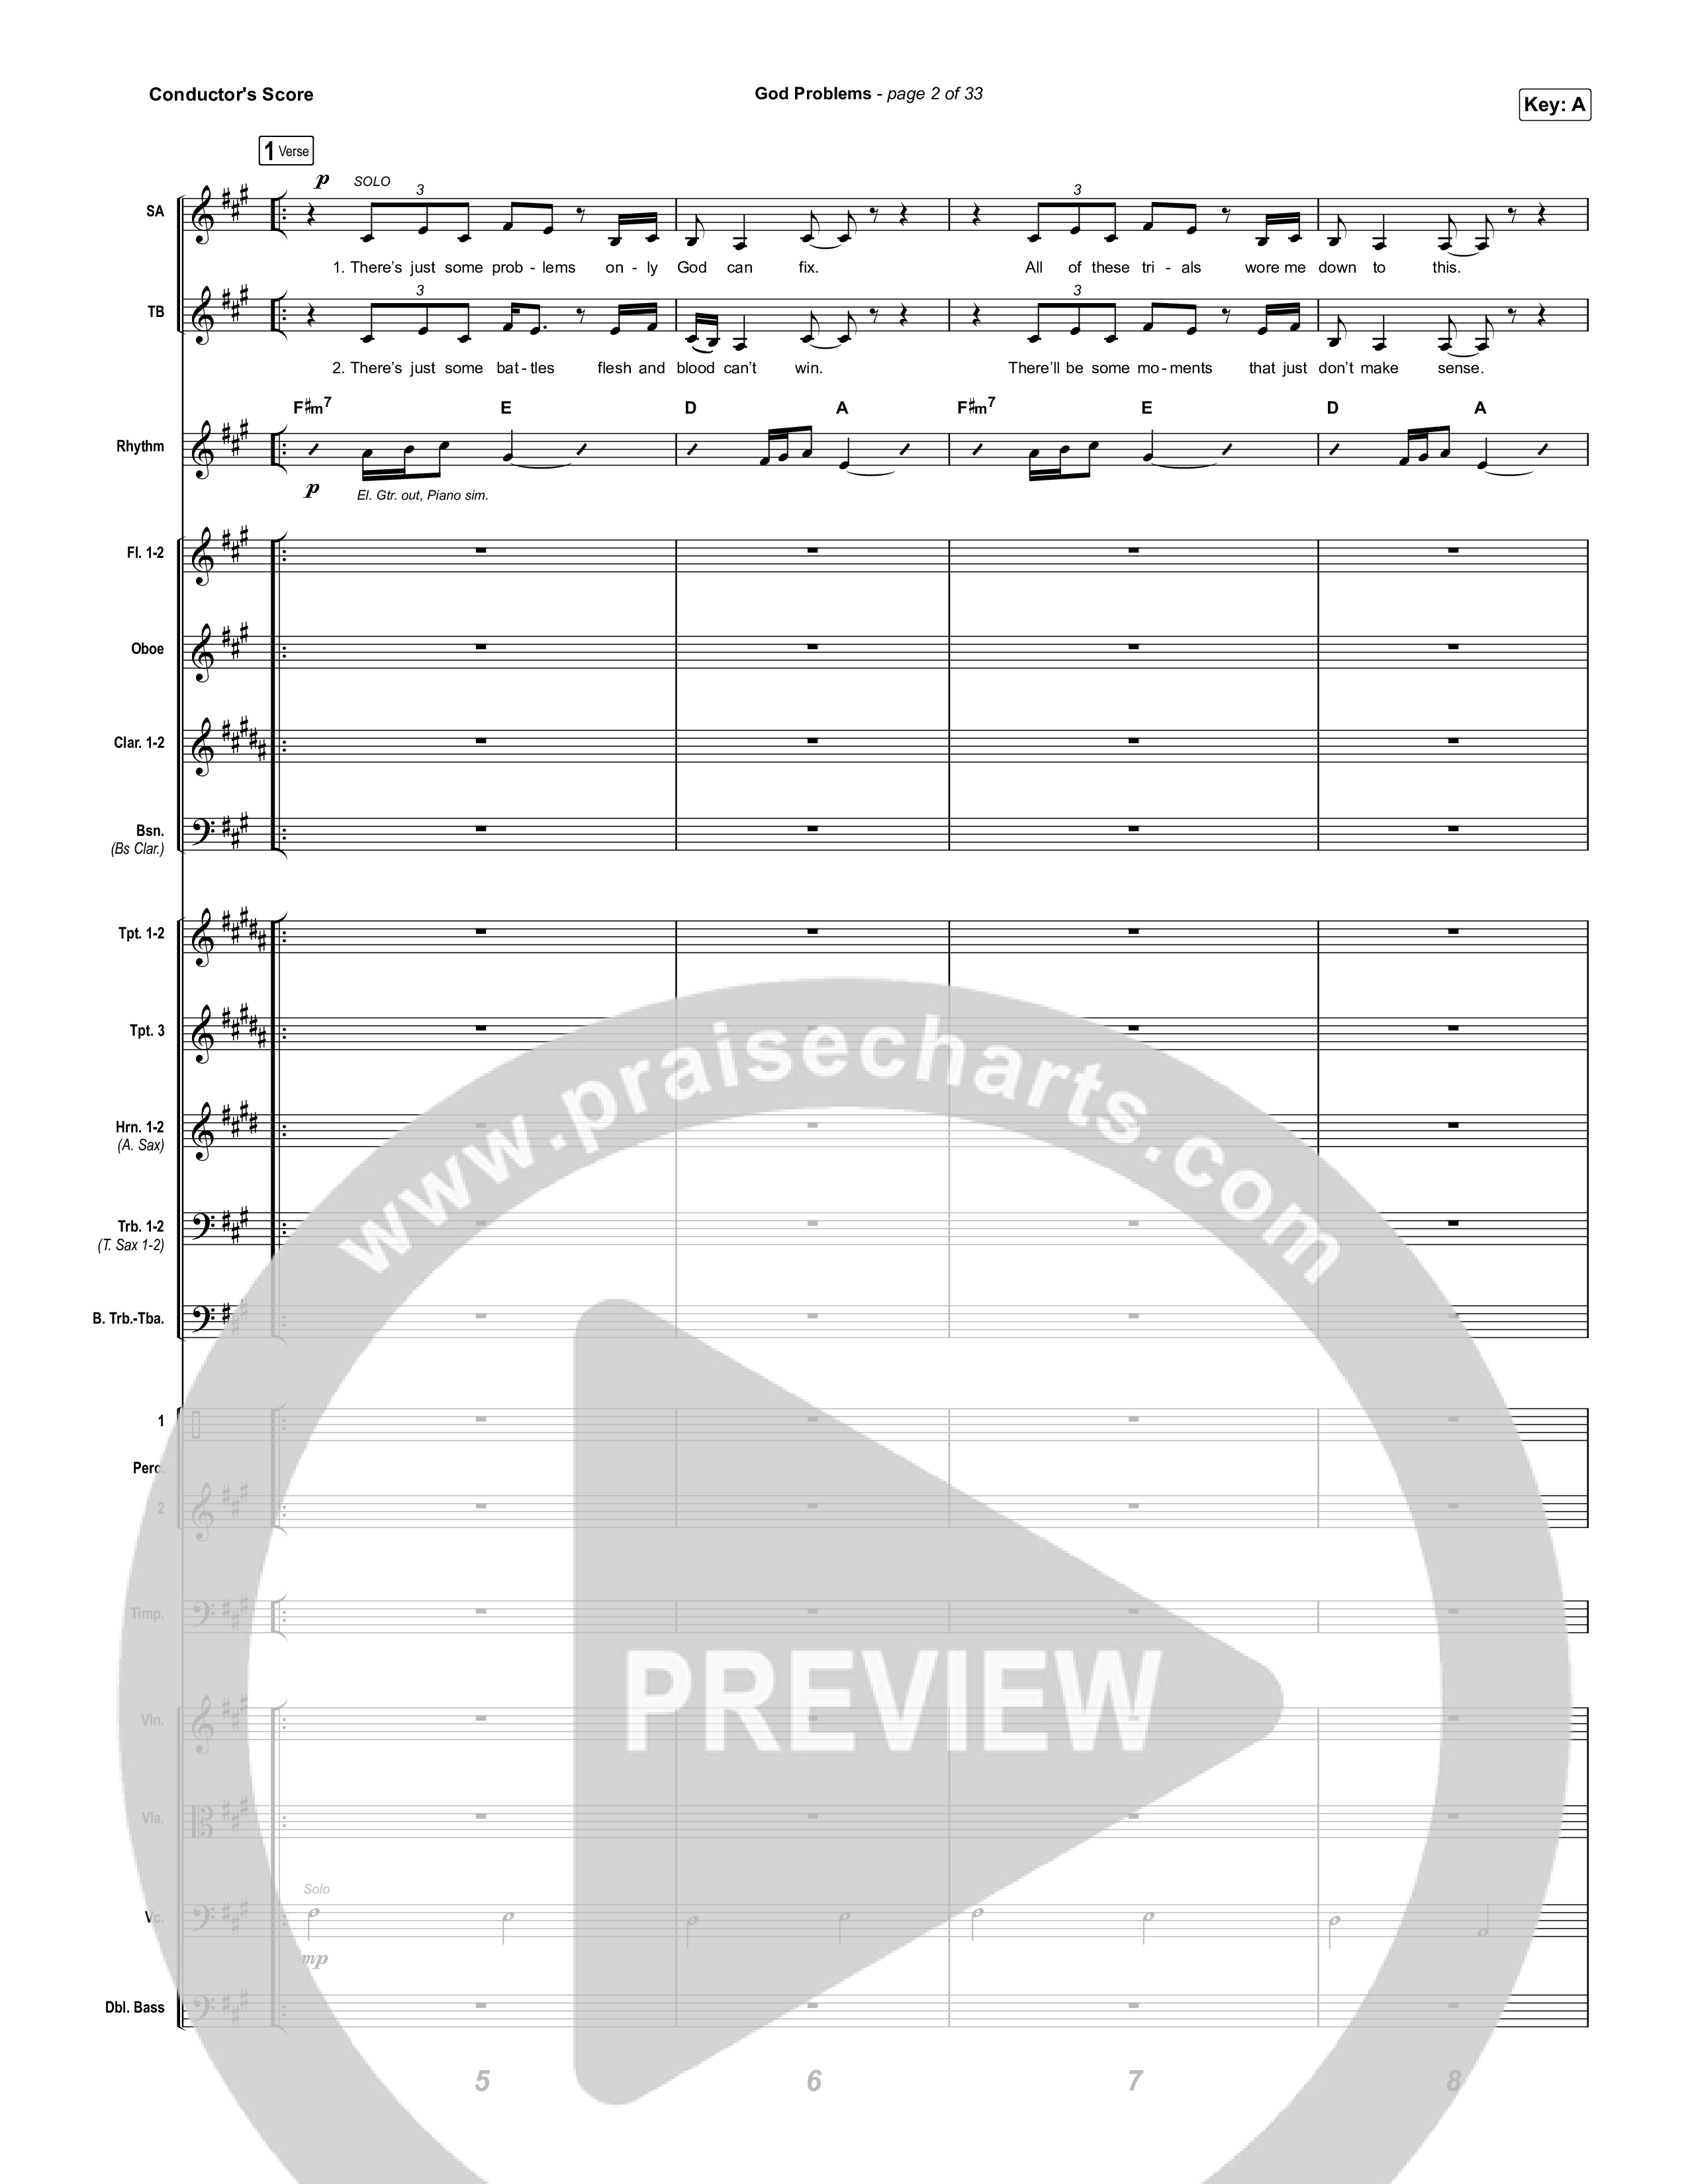 God Problems Conductor's Score (Maverick City Music / Chandler Moore / Naomi Raine)